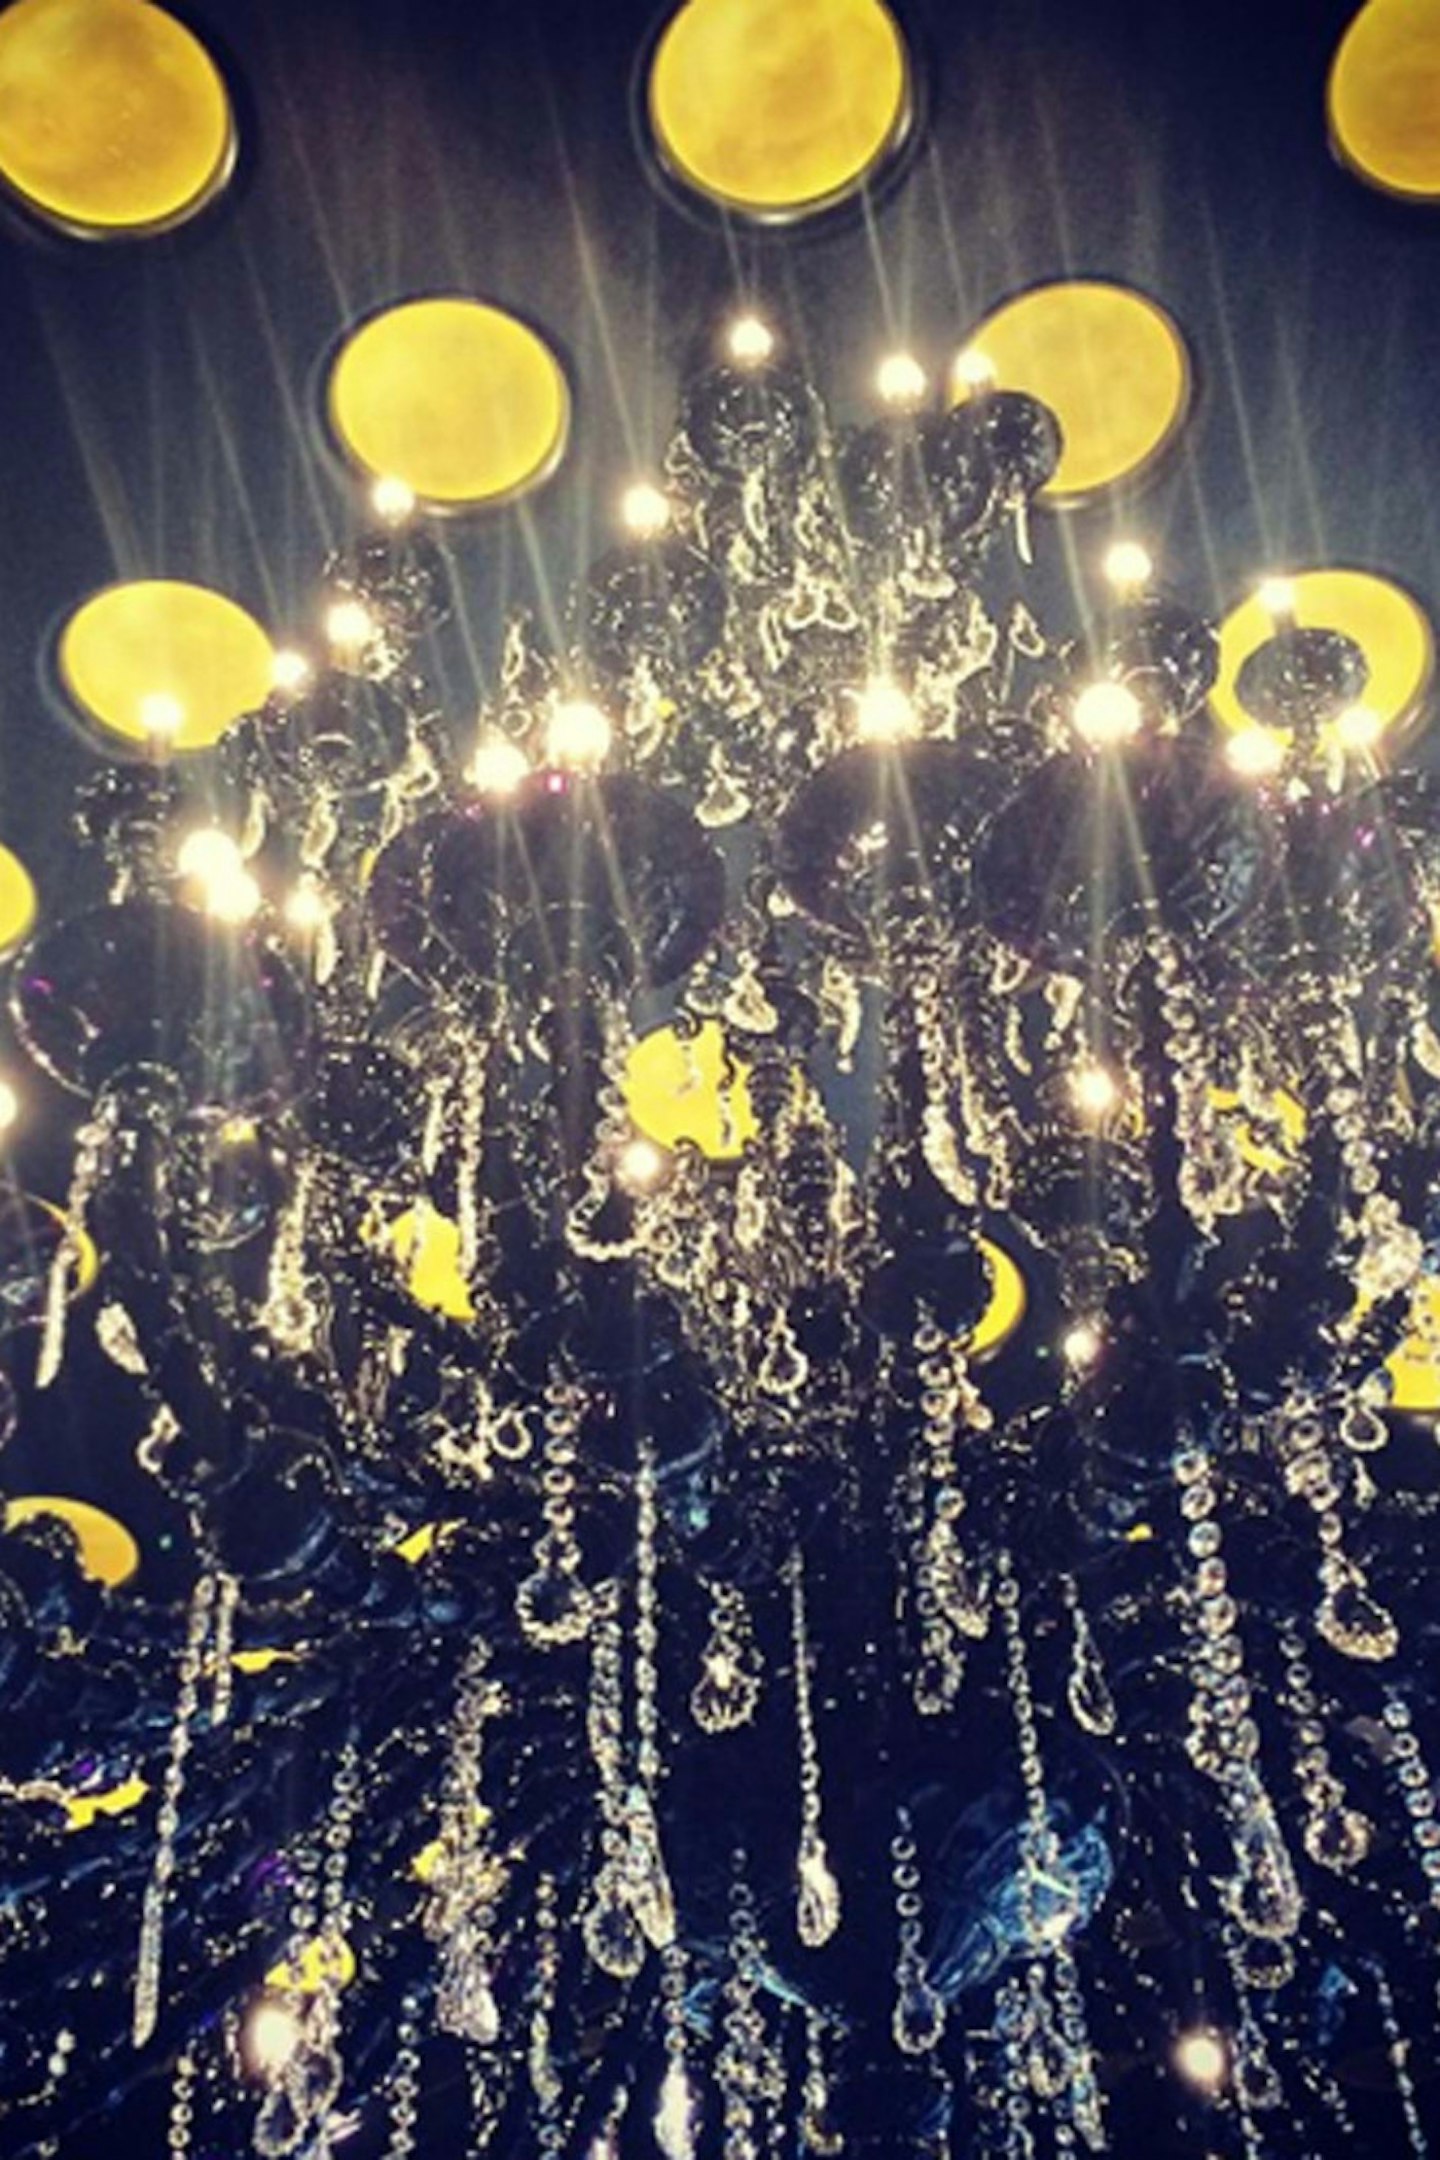 A chandelier @dolcegabbana style #MFW #Grazia360